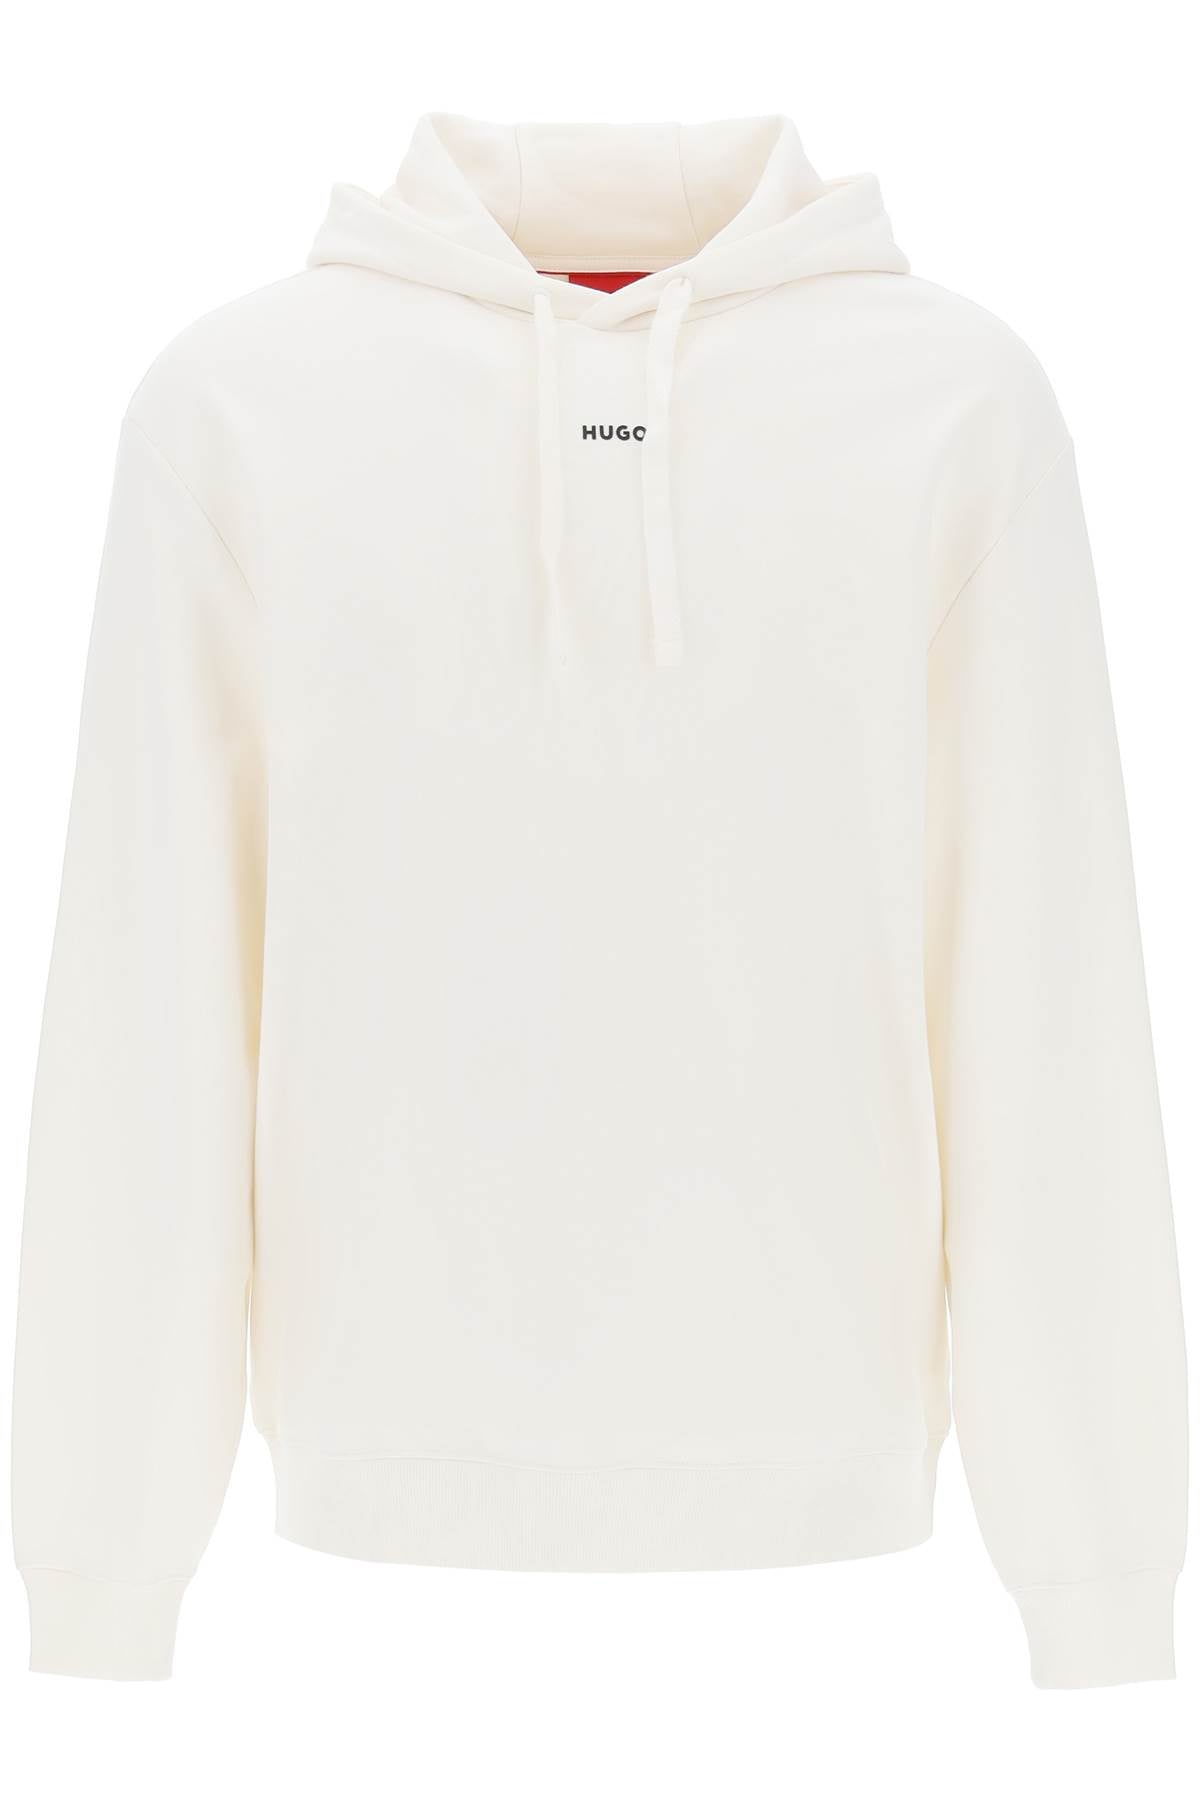 Hugo dapo hoodie-men > clothing > t-shirts and sweatshirts > sweatshirts-Hugo-Urbanheer